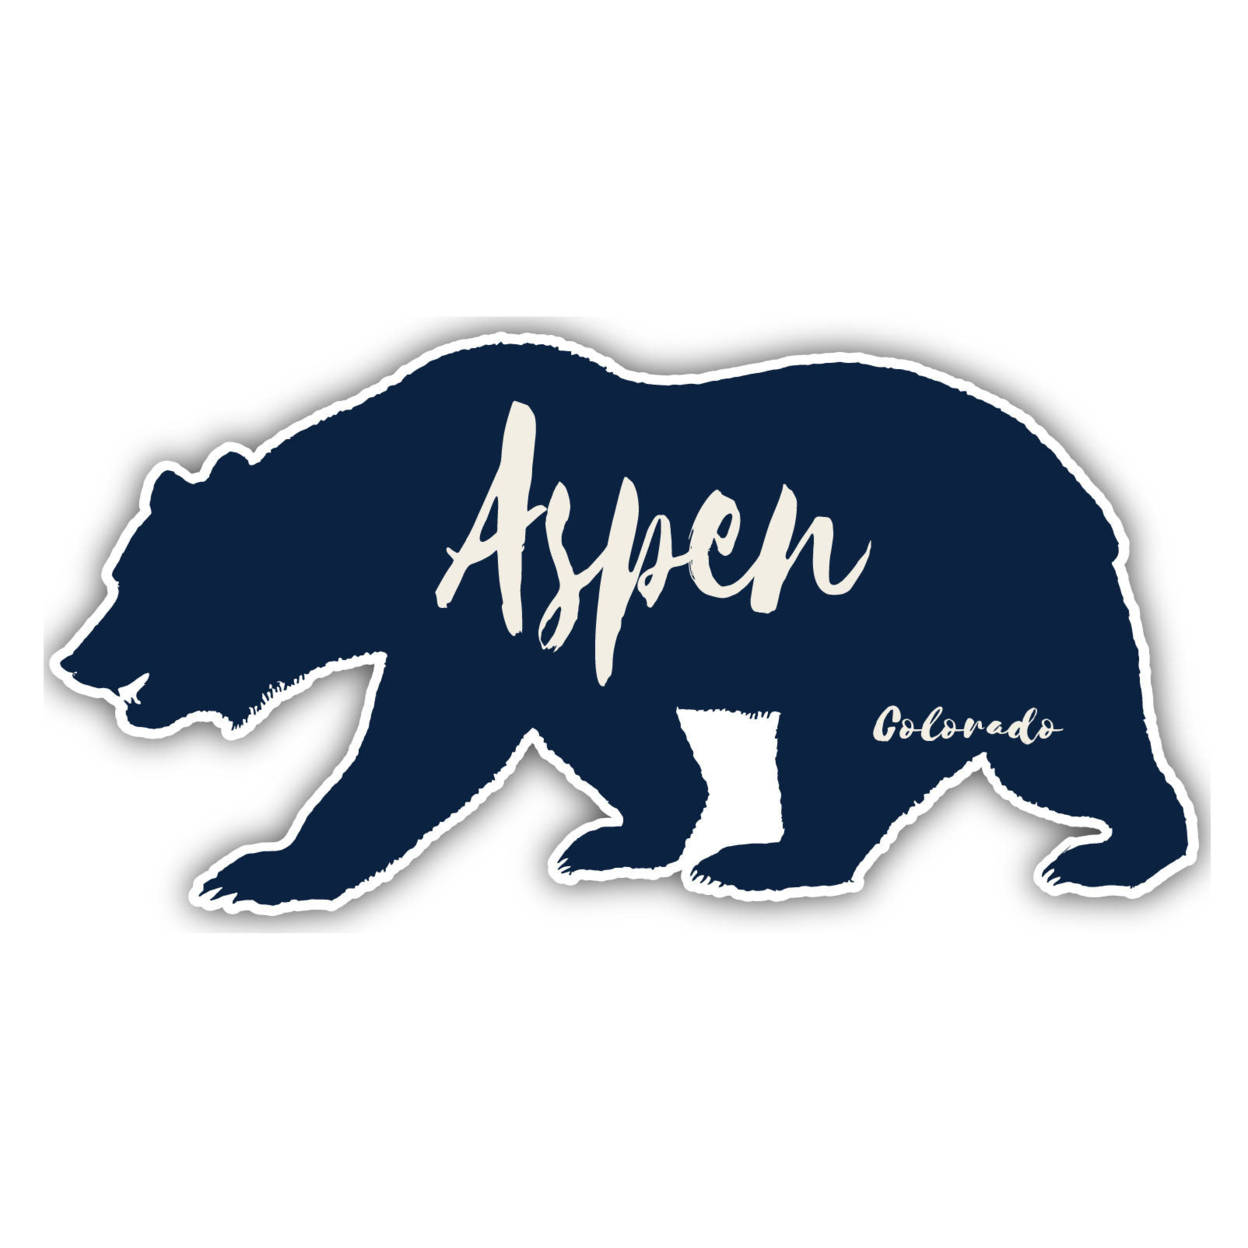 Aspen Colorado Souvenir Decorative Stickers (Choose Theme And Size) - Single Unit, 10-Inch, Bear